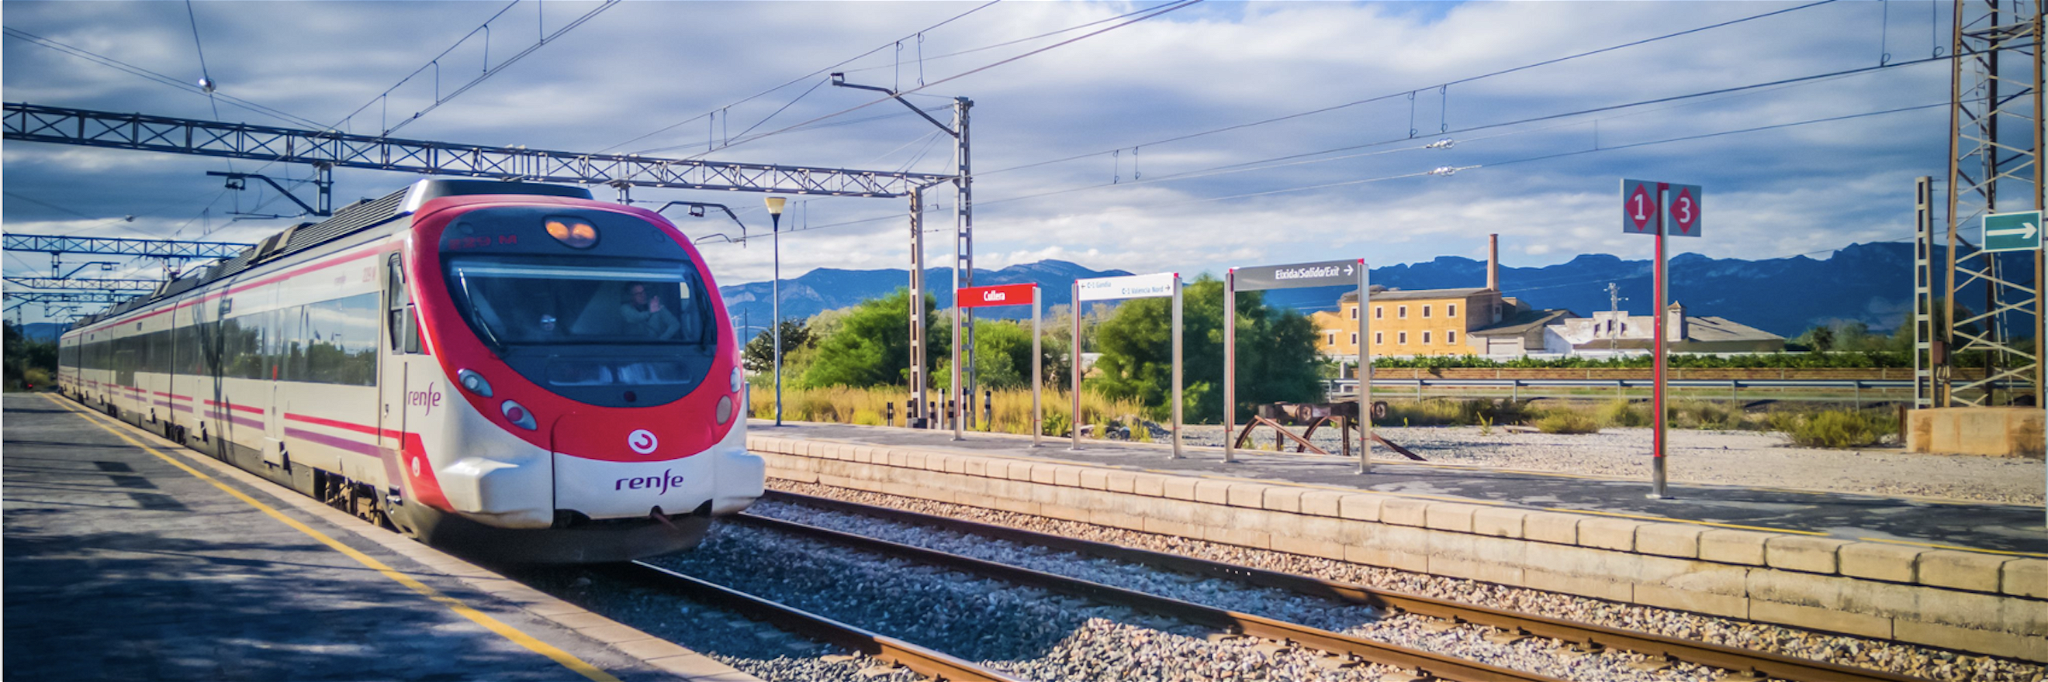 Renfe&nbsp;is Spain's national&nbsp;railway&nbsp;company, running most regional and high-speed AVE&nbsp;trains.&nbsp;